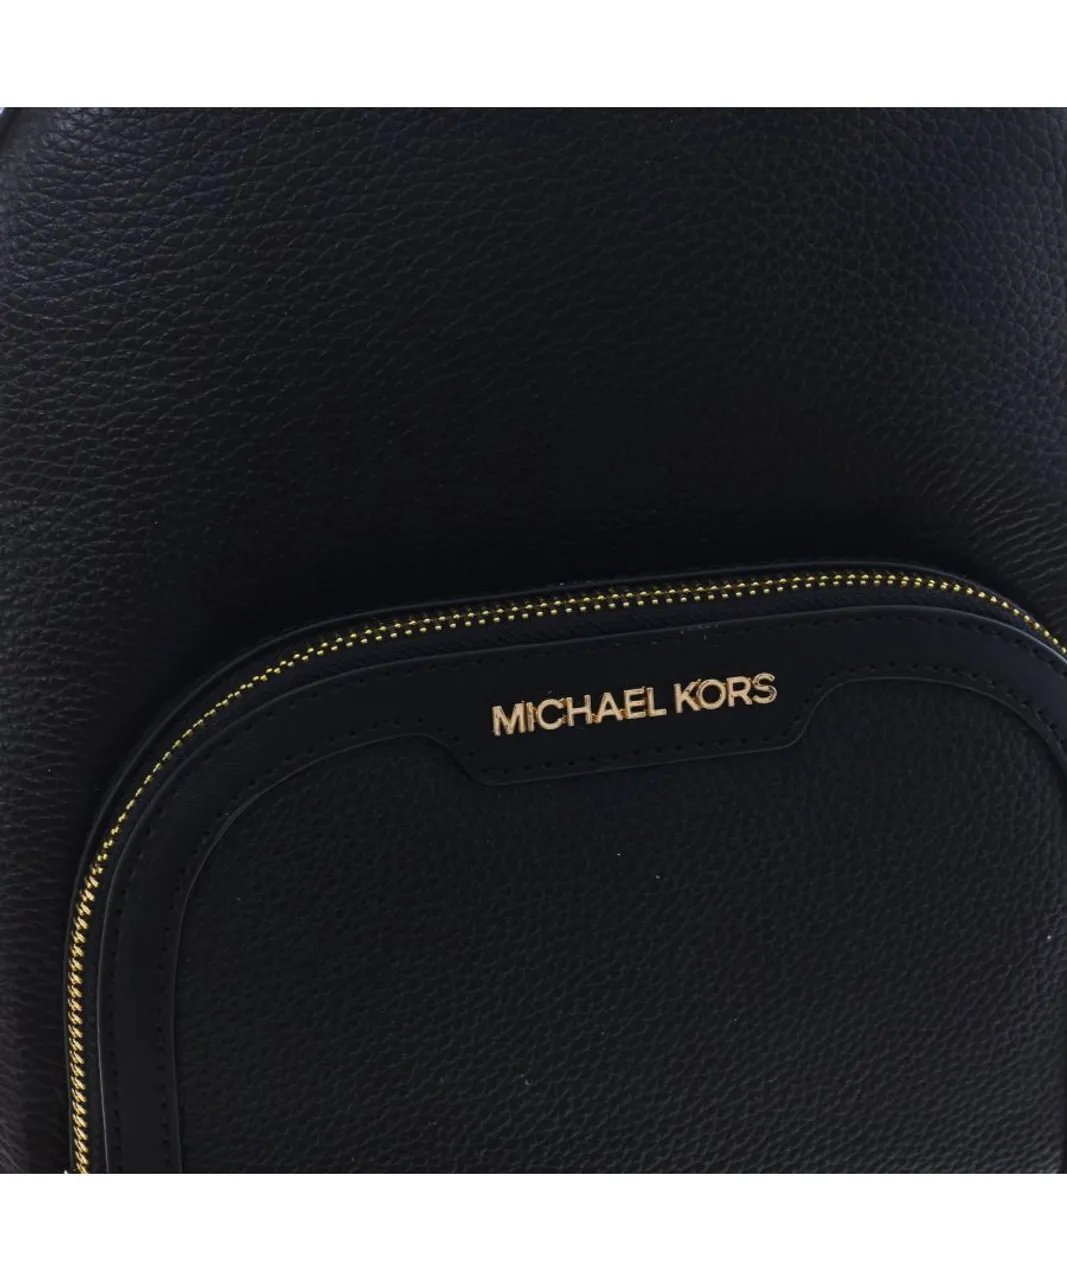 Michael Kors JAYCEE 35S2G8TB2L WoMens backpack - Black Calfskin - One Size